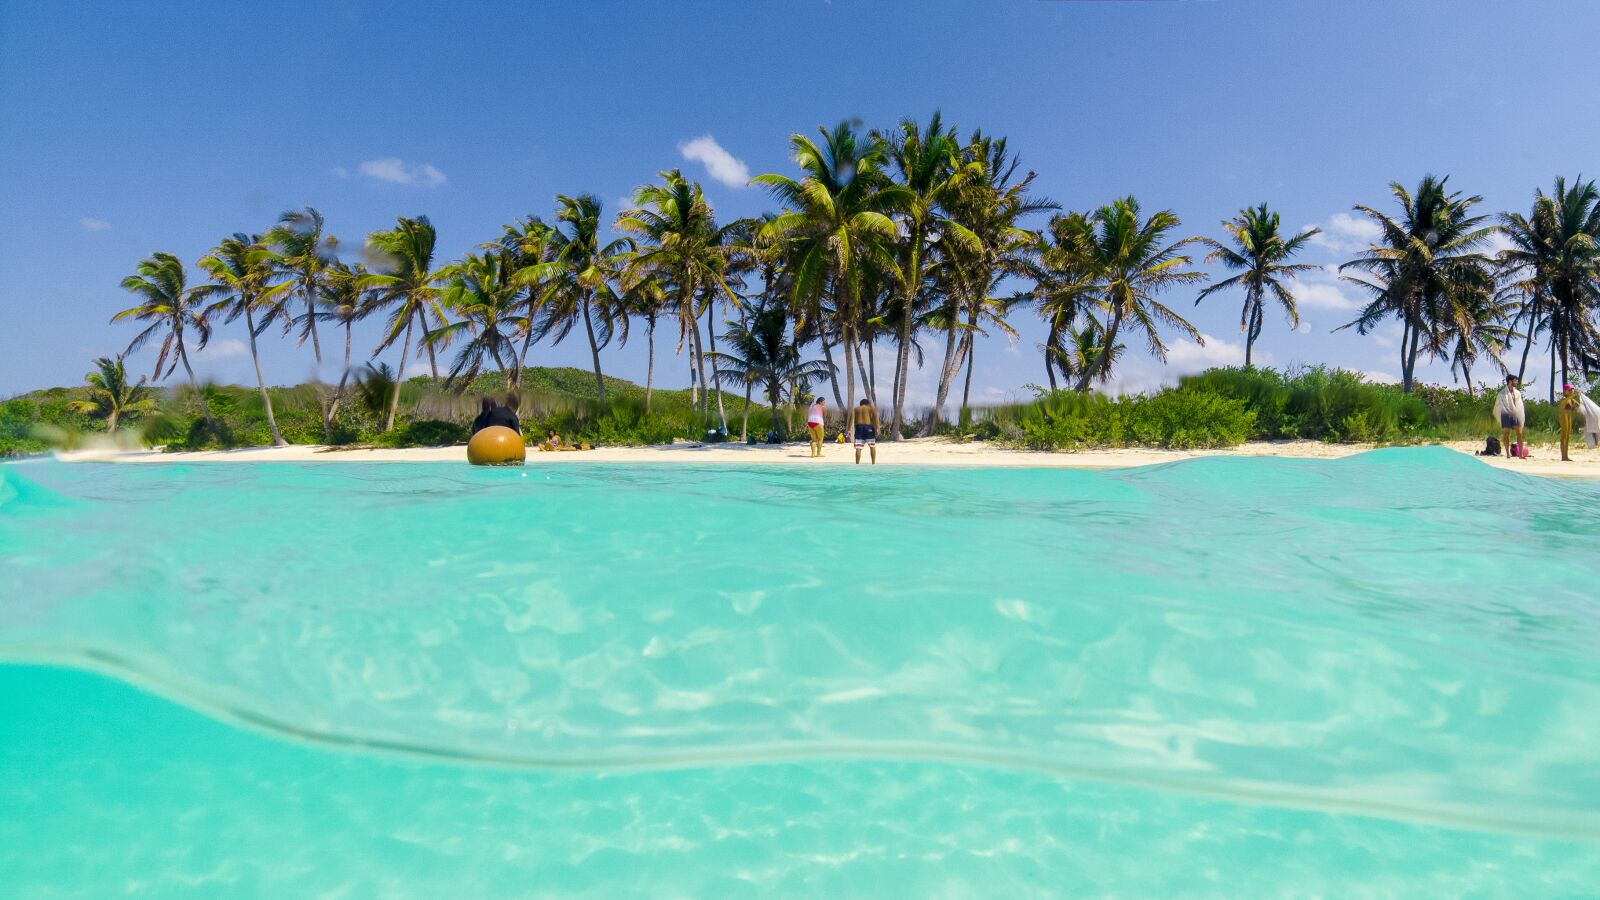 DJI OSMO ACTION sample photo. Beach, isla contoy, cancun photography